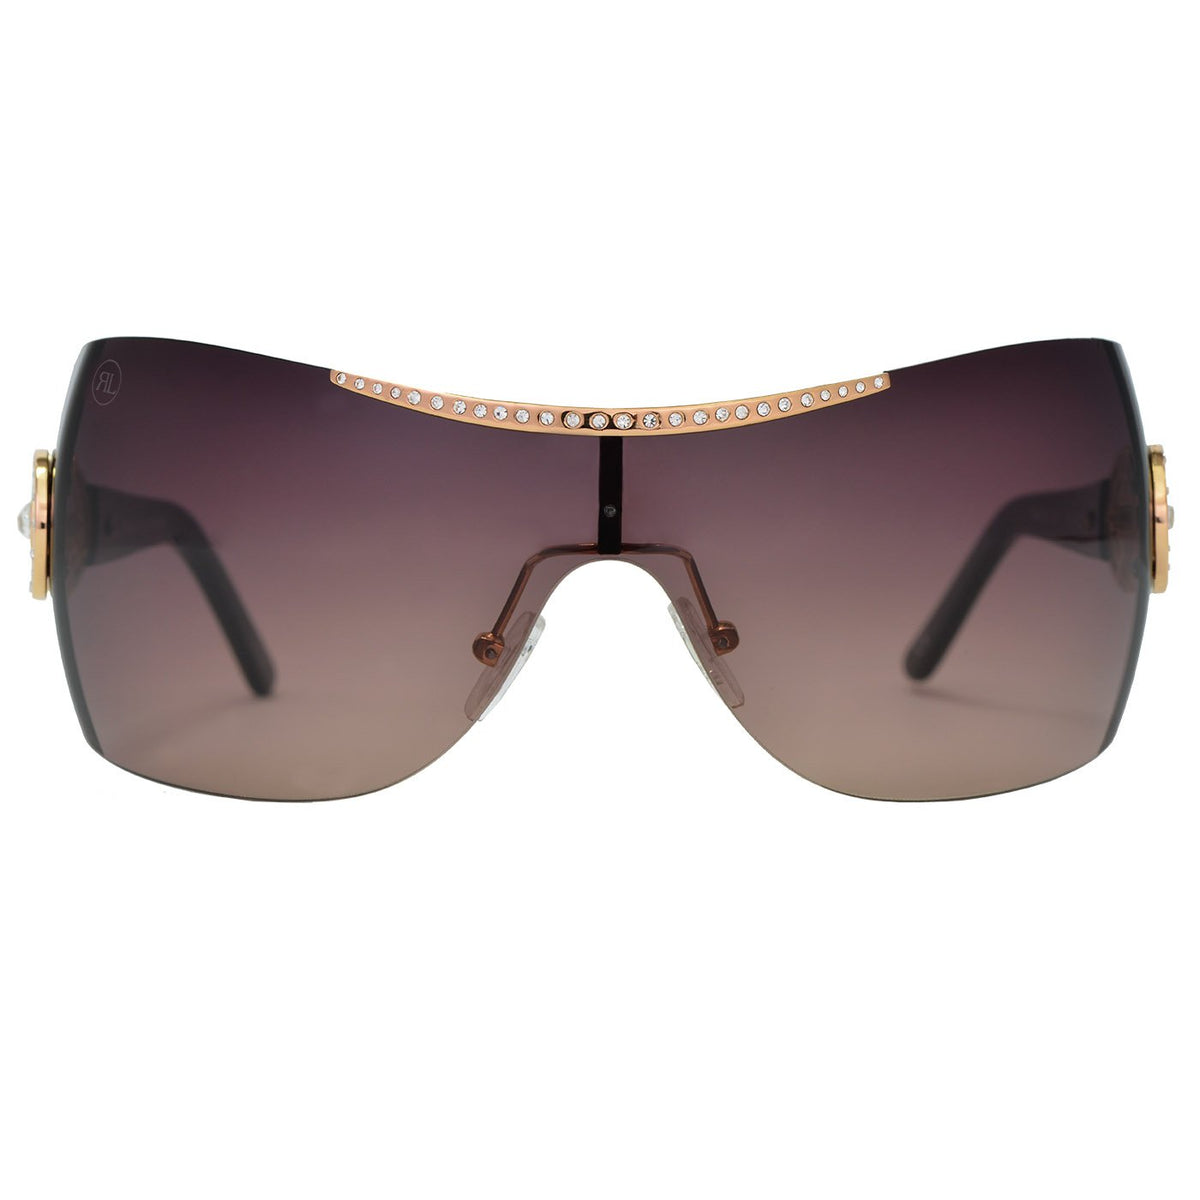 BVLGARI Vintage Jewel Sunglasses Rare Oval Square Gold White